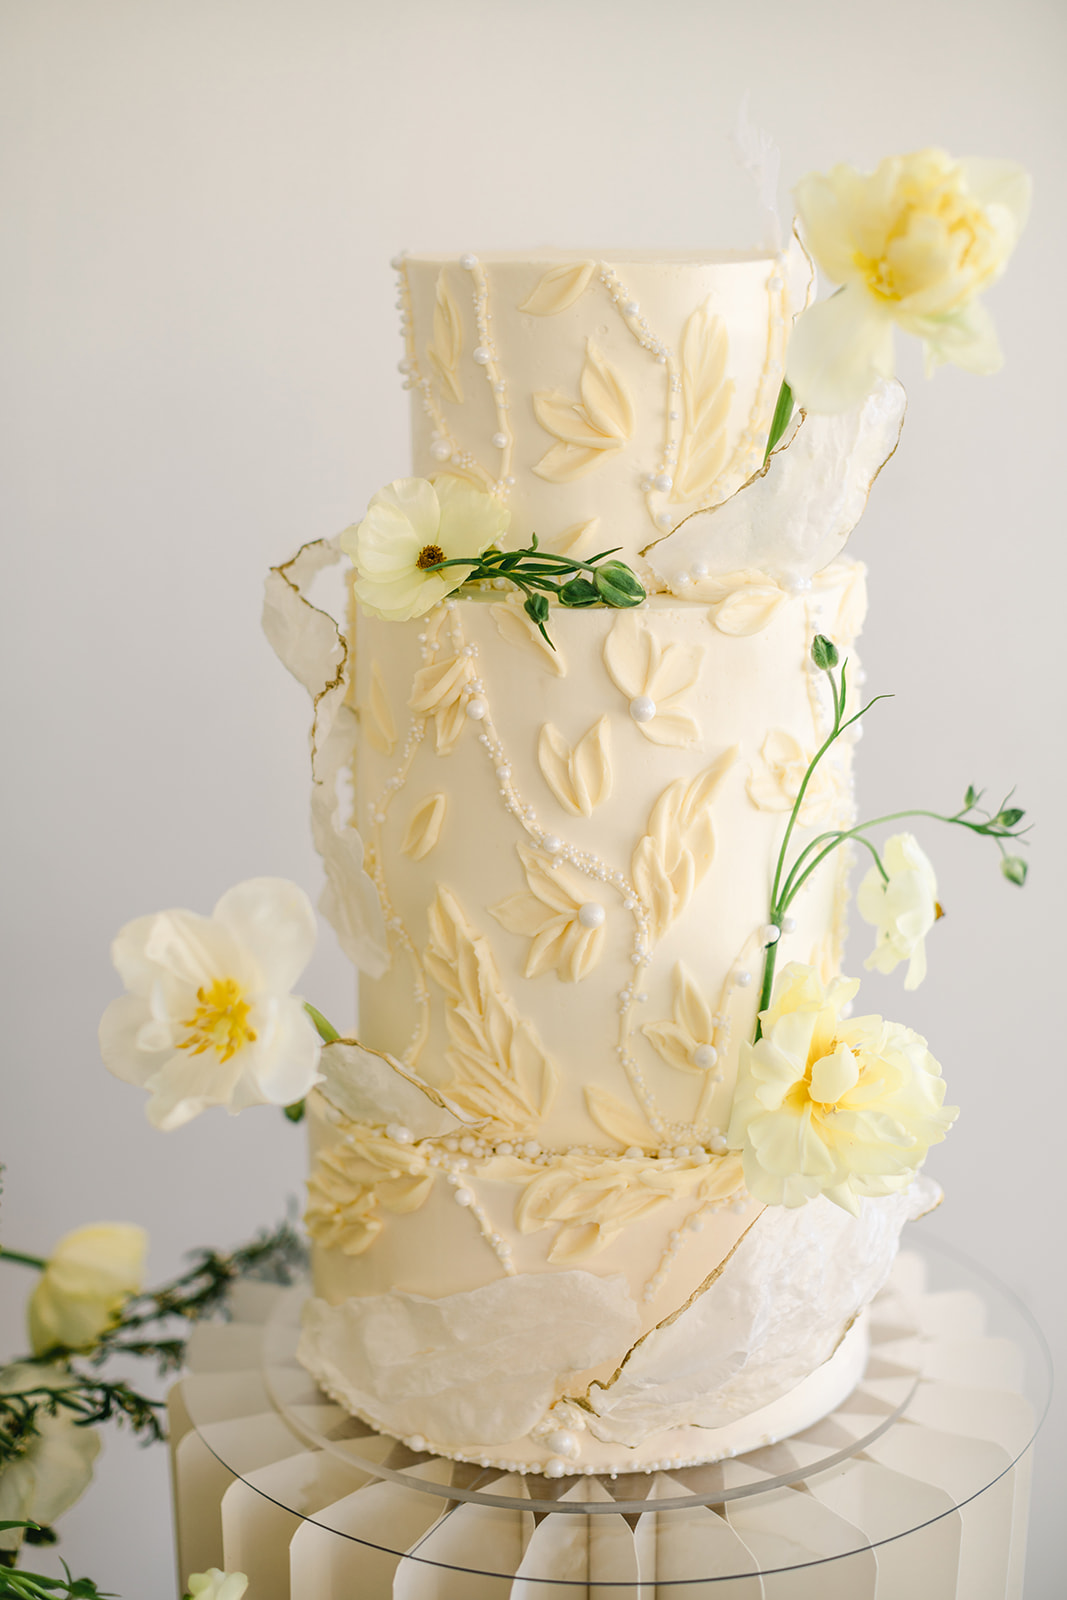 Yellow Palette Knife Flower Cake for Spring Wedding - Crumb Cakery - White Aspen Creative